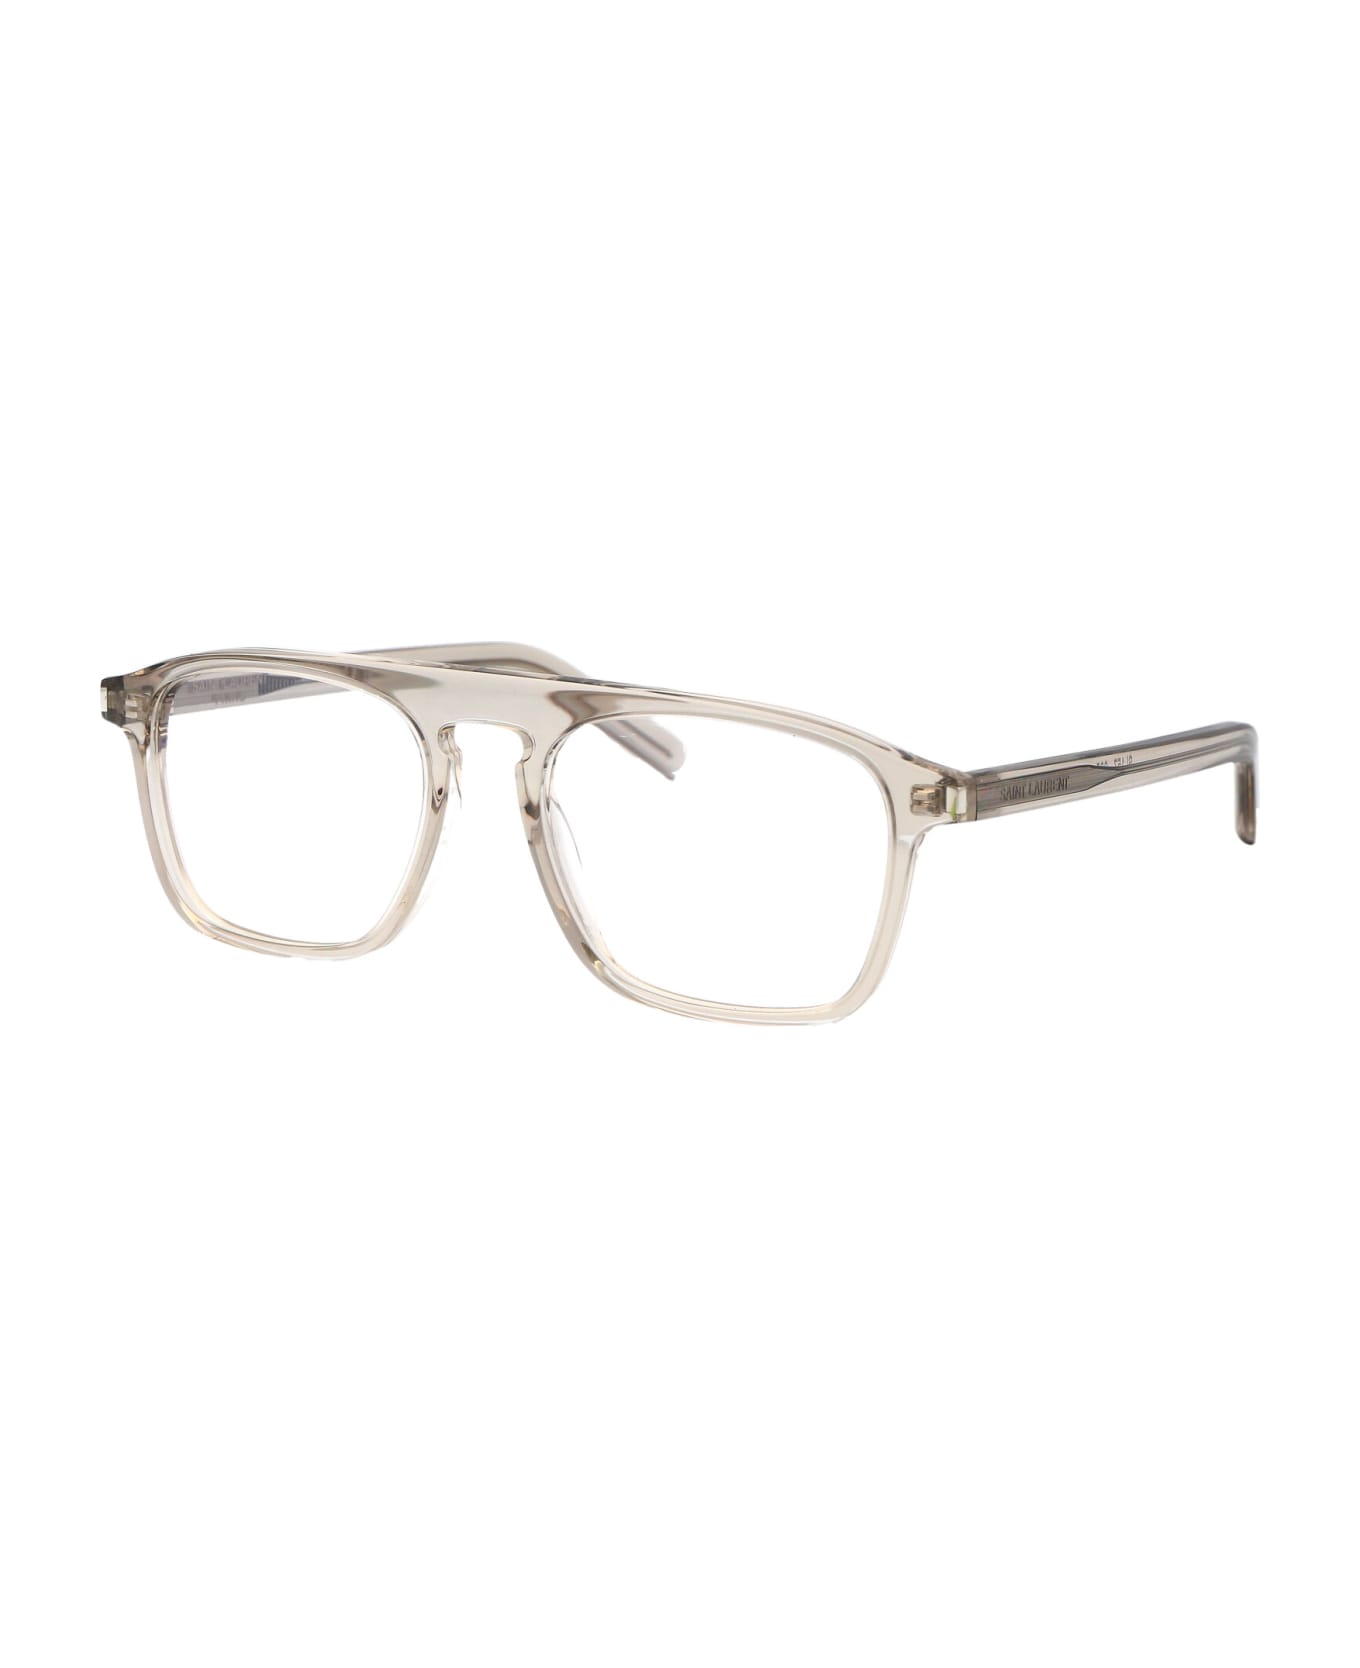 Saint Laurent Eyewear Sl 157 Glasses - 005 BEIGE BEIGE TRANSPARENT